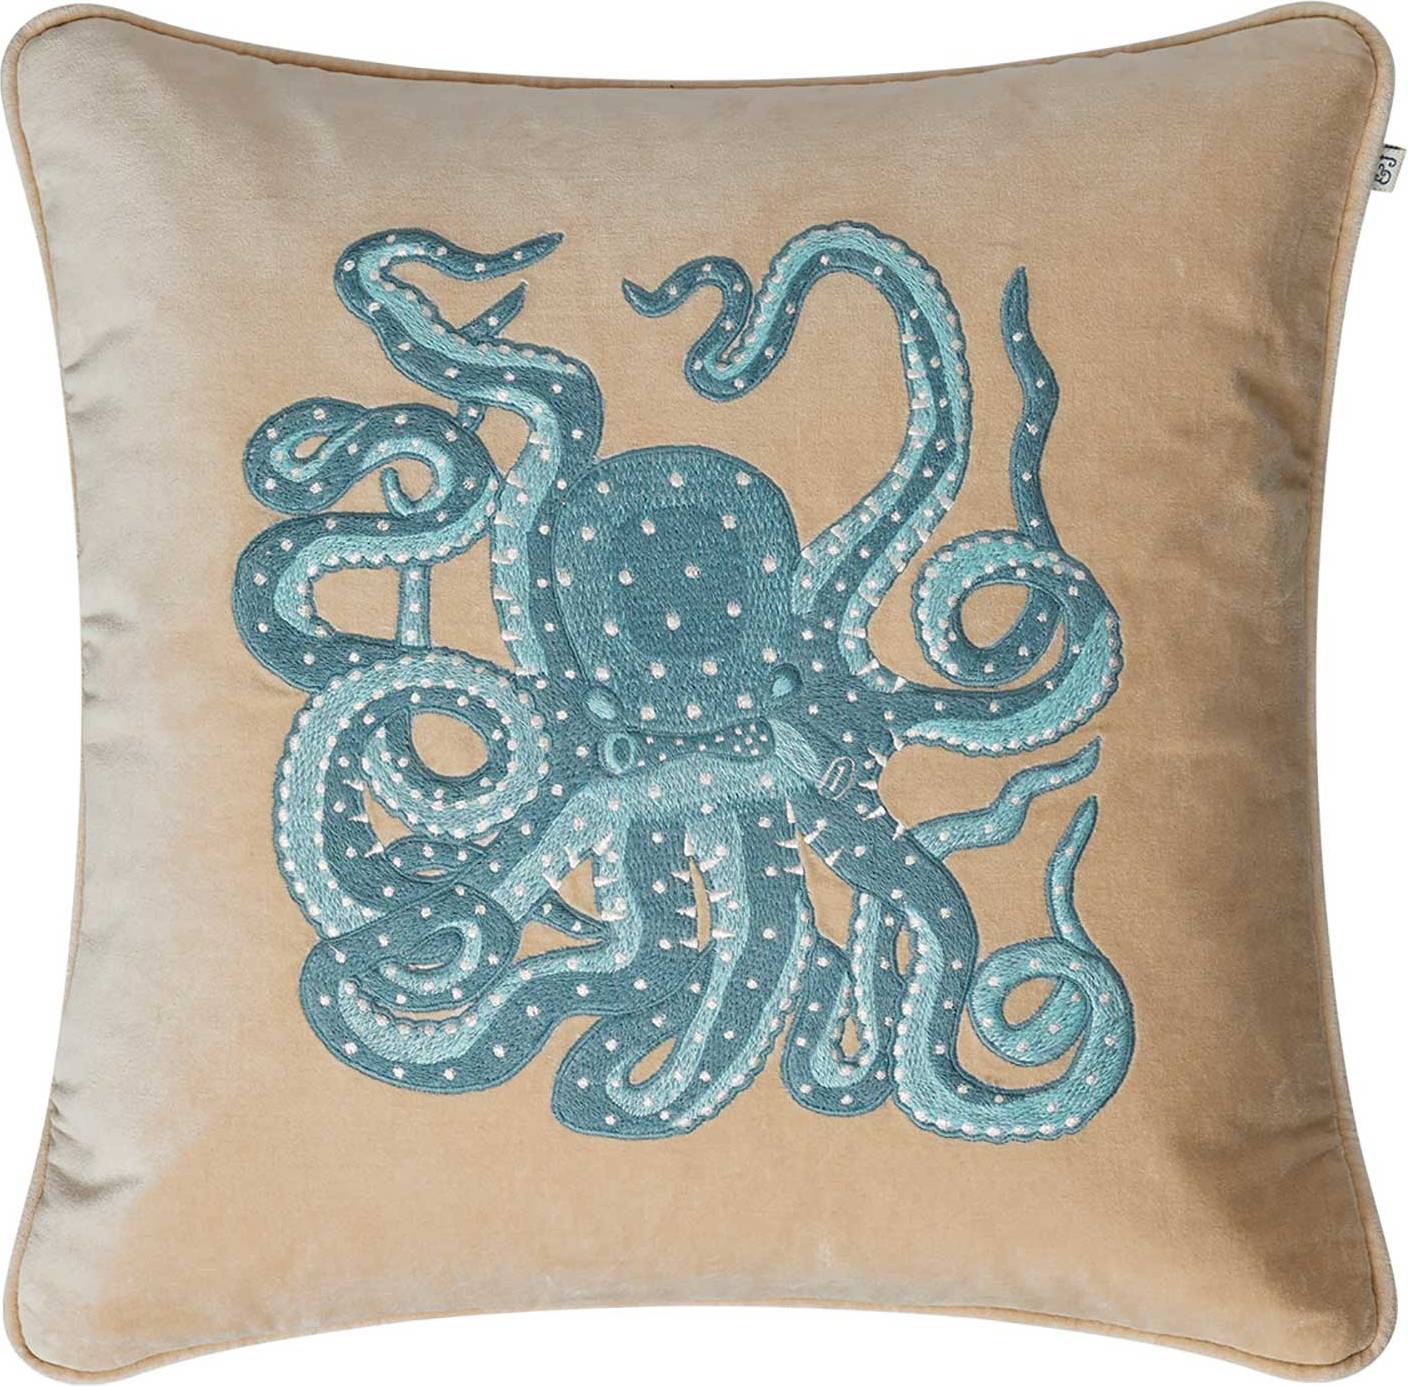  Bild på Chhatwal & Jonsson Octopus Kuddöverdrag Blå, Beige (50x50cm) prydnadskudde